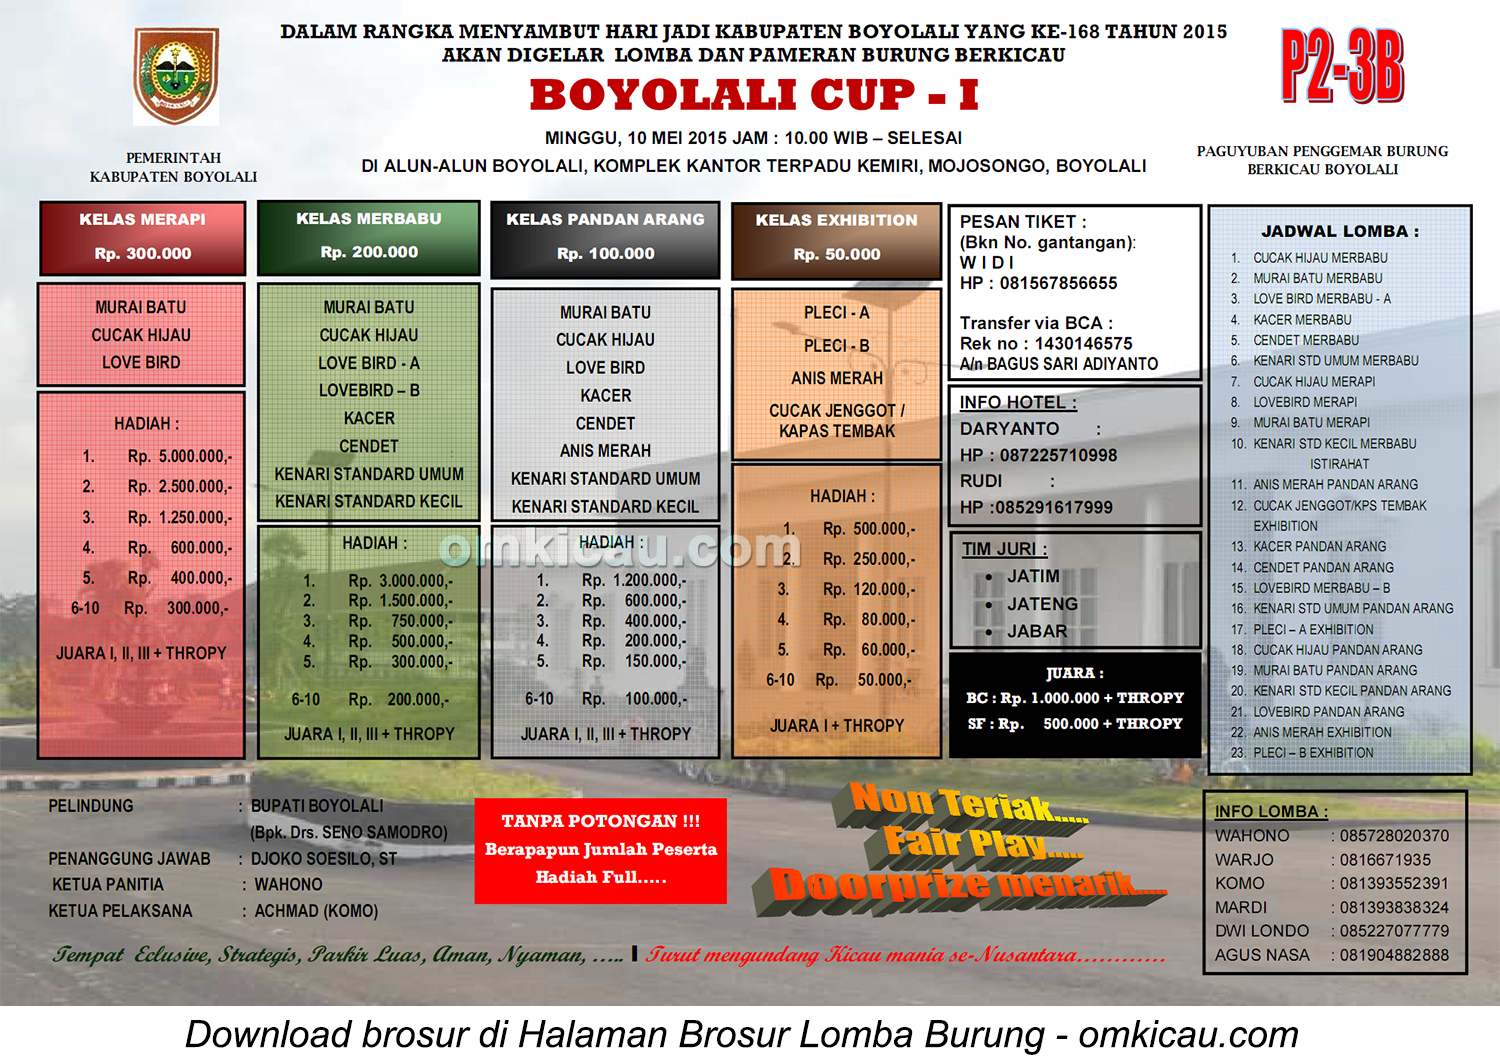 Brosur Lomba Burung Berkicau Boyolali Cup - I, Boyolali, 10 Mei 2015